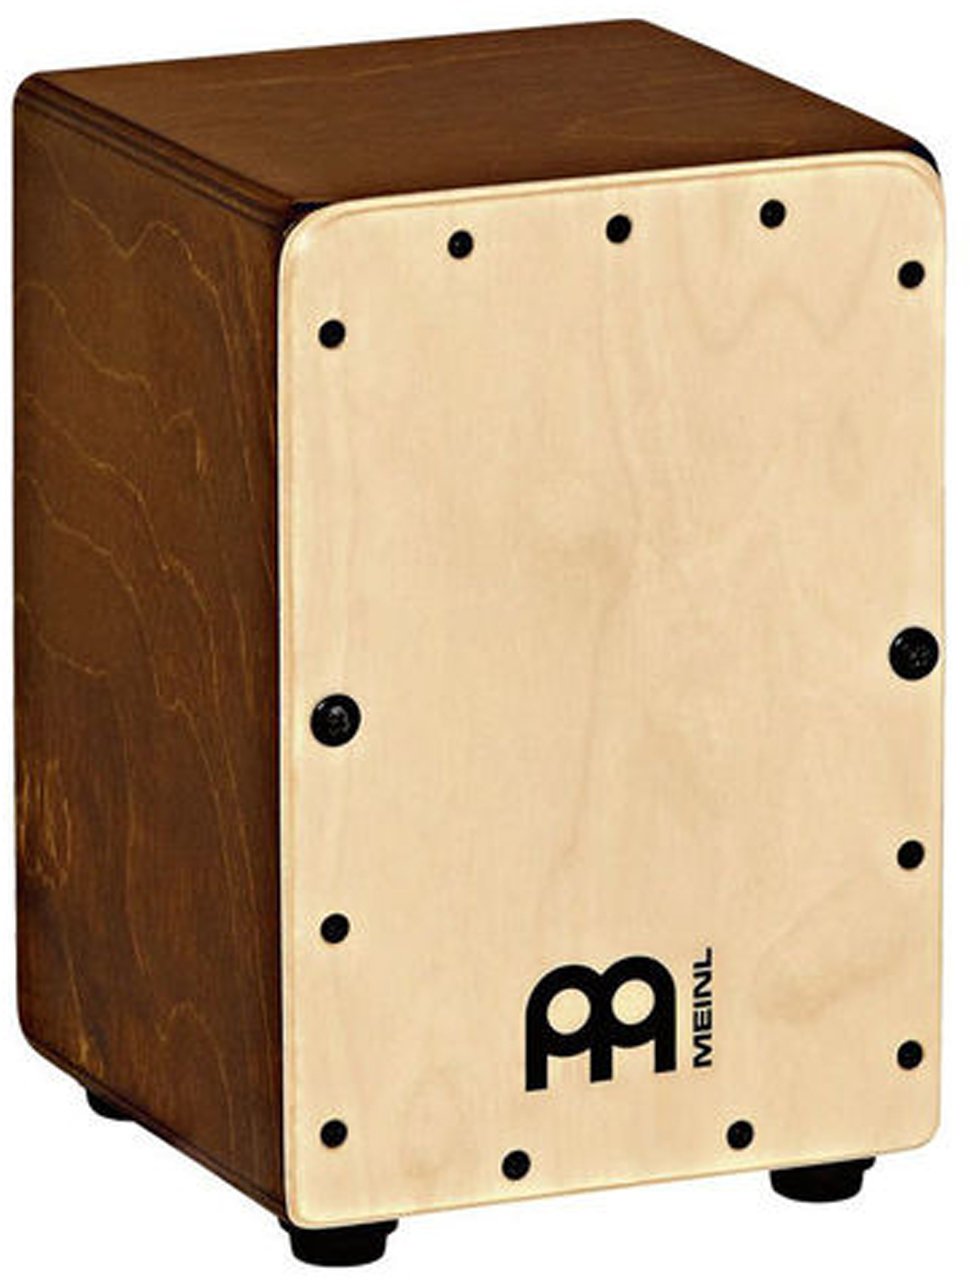 Wood-Cajon Meinl MC1AB-B Mini Wood-Cajon (Just unboxed)